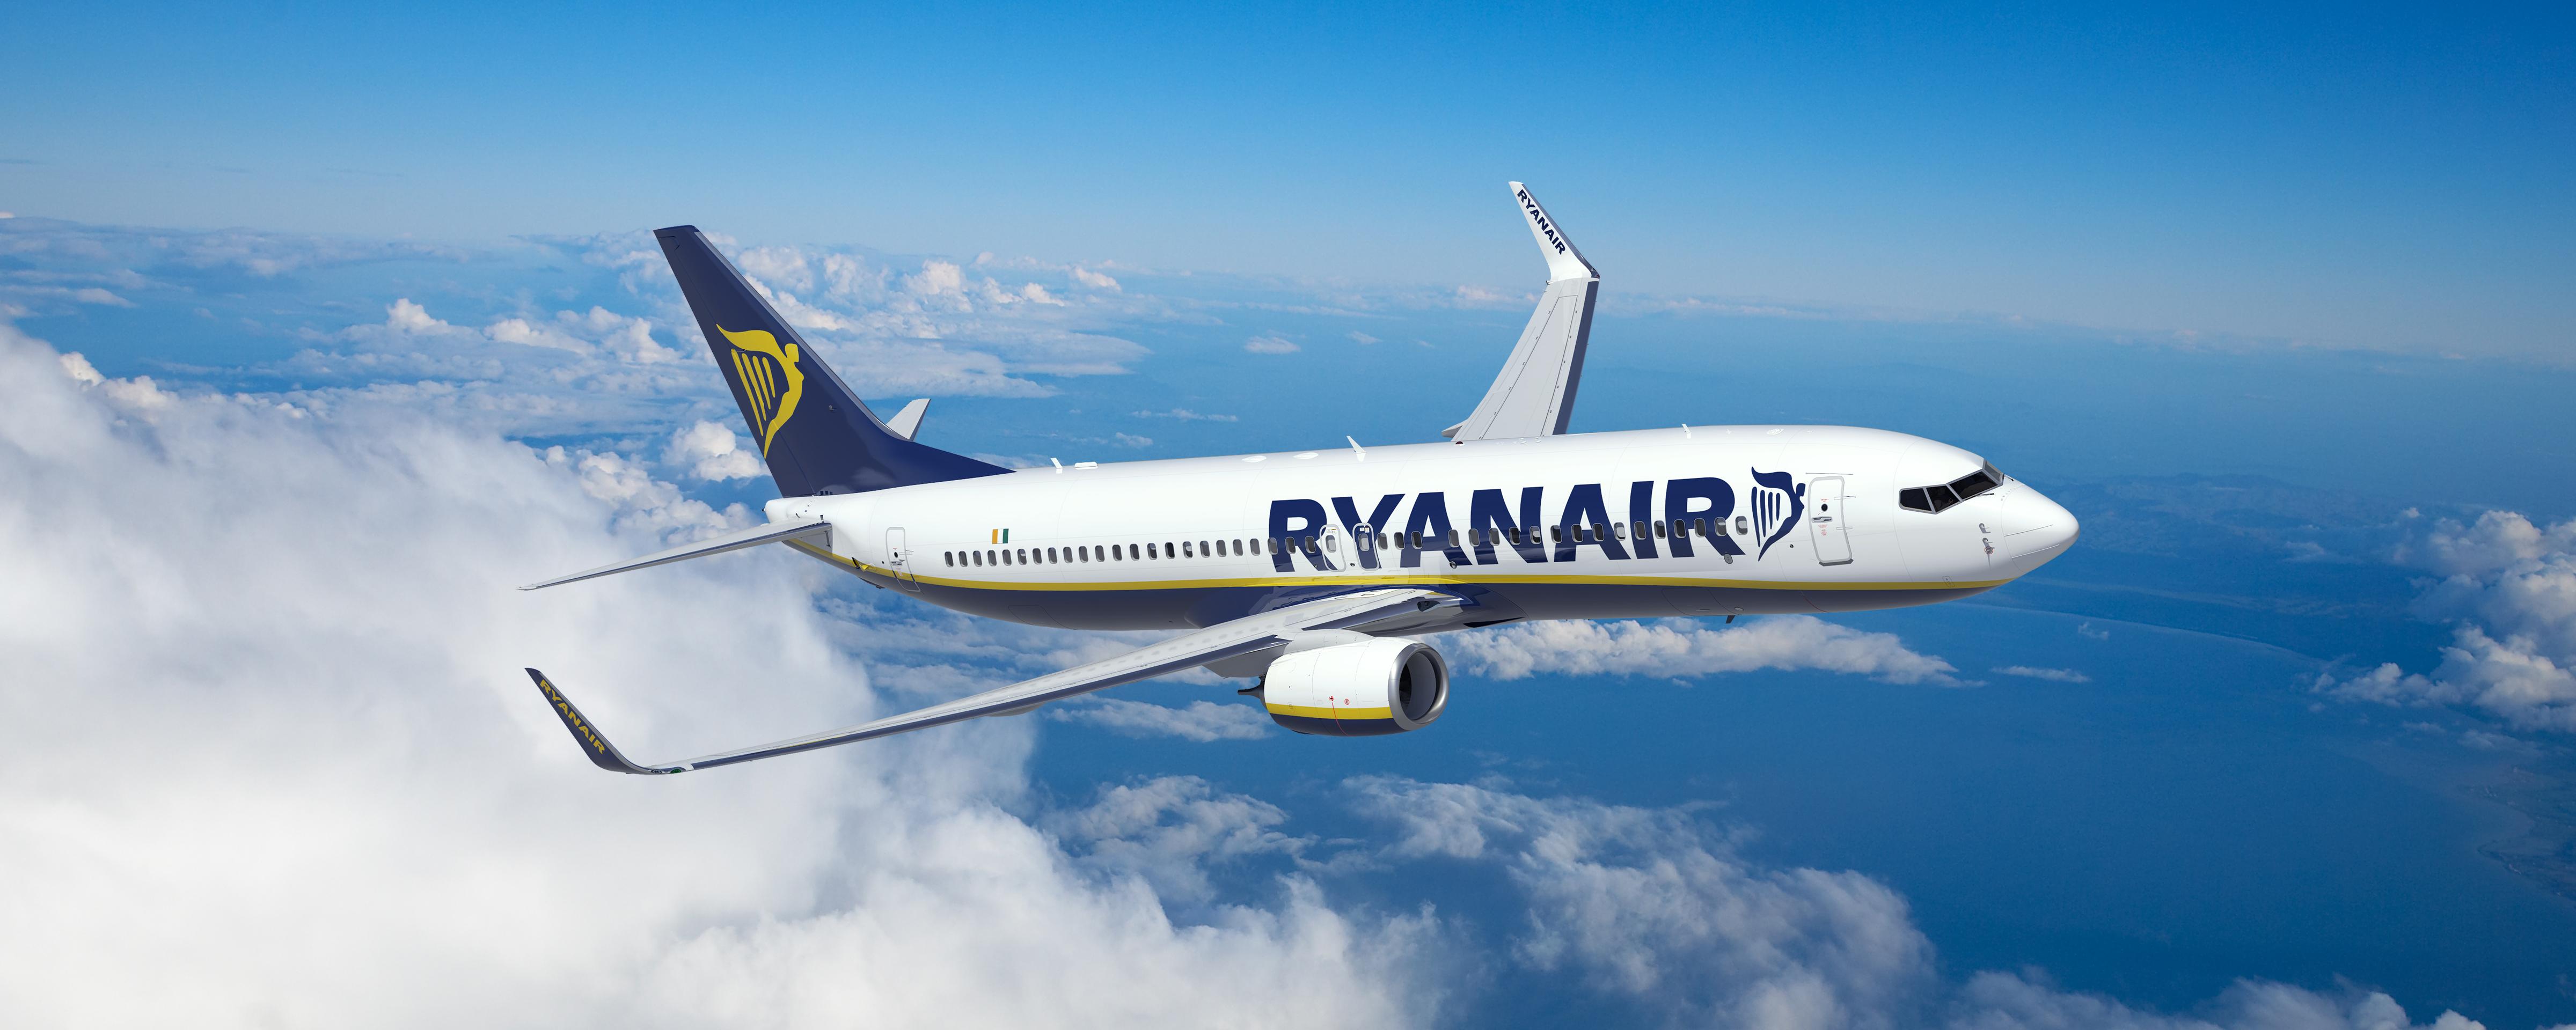 Ryanair announces new winter maintenance agreement with Caerdav